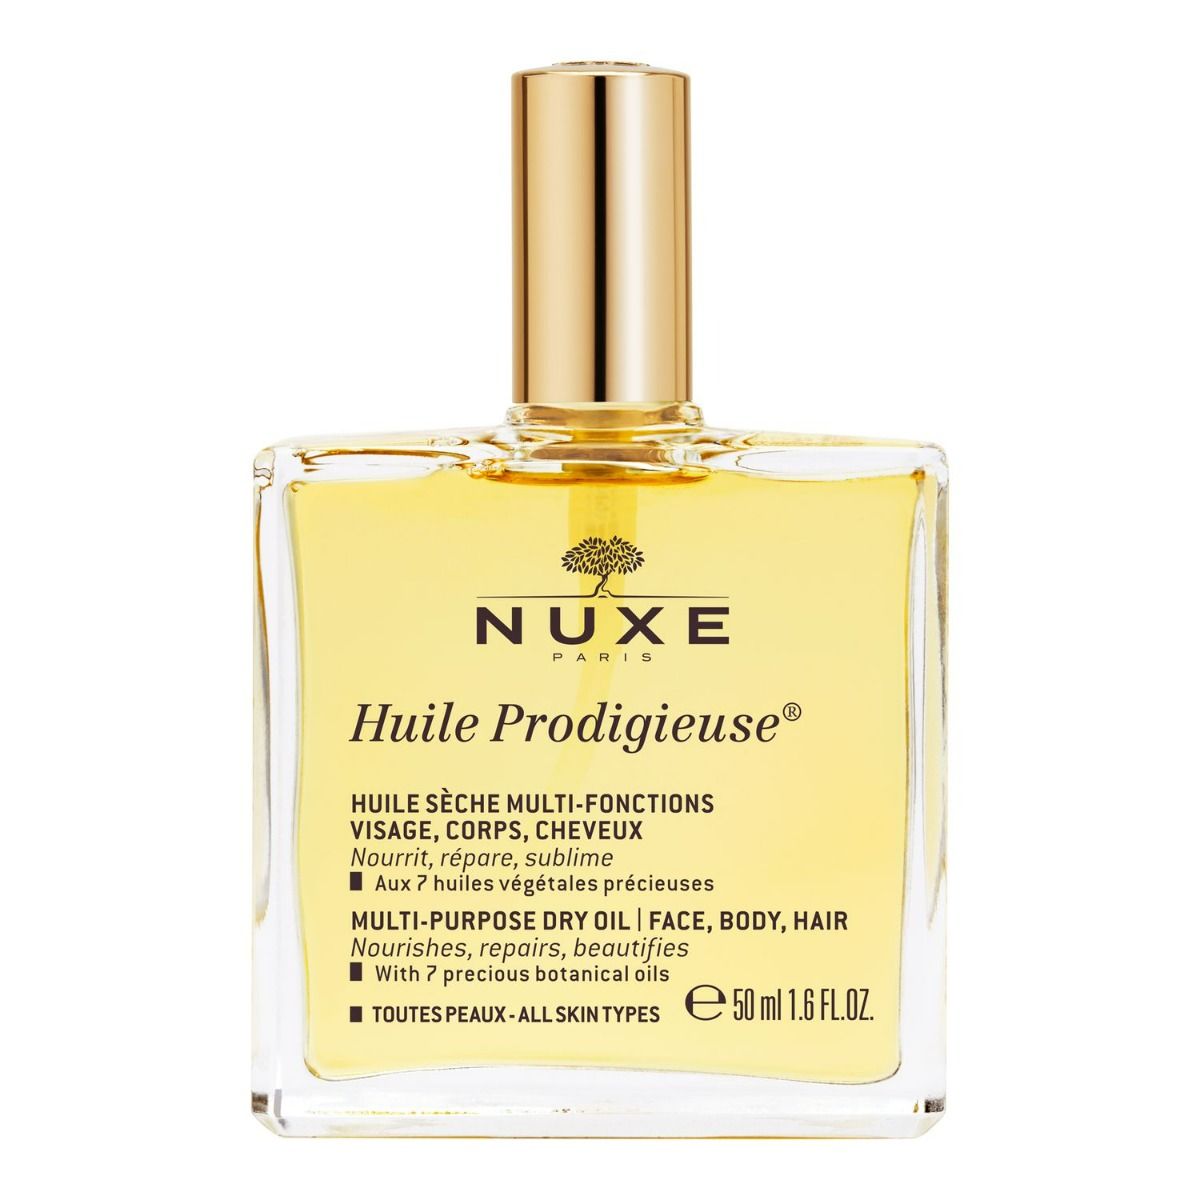 Nuxe Huile Prodigieuse масло для лица, тела и волос, 50 ml gernetic huile de beuate beauty oil масло для лица и тела масло красоты 500 мл